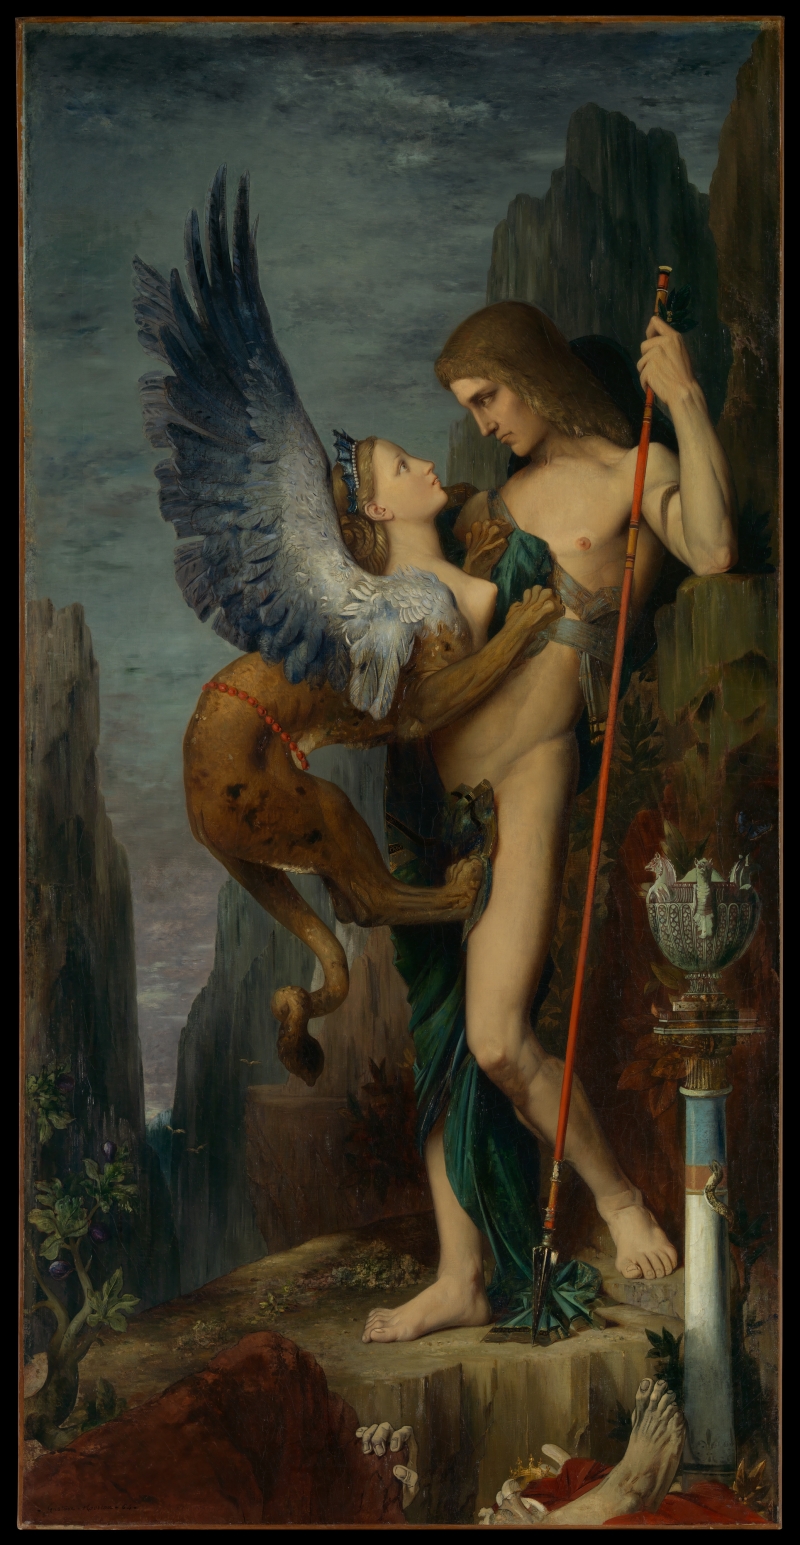 Gustave Moreau, Ödipus und die Sphinx, 1864, Öl auf Leinwand, 206,4 x 104,8 cm, New York, The Metropolitan Museum of Art, Bequest of William H. Herriman, 1920, Foto: (OA) Open Access / Public Domain